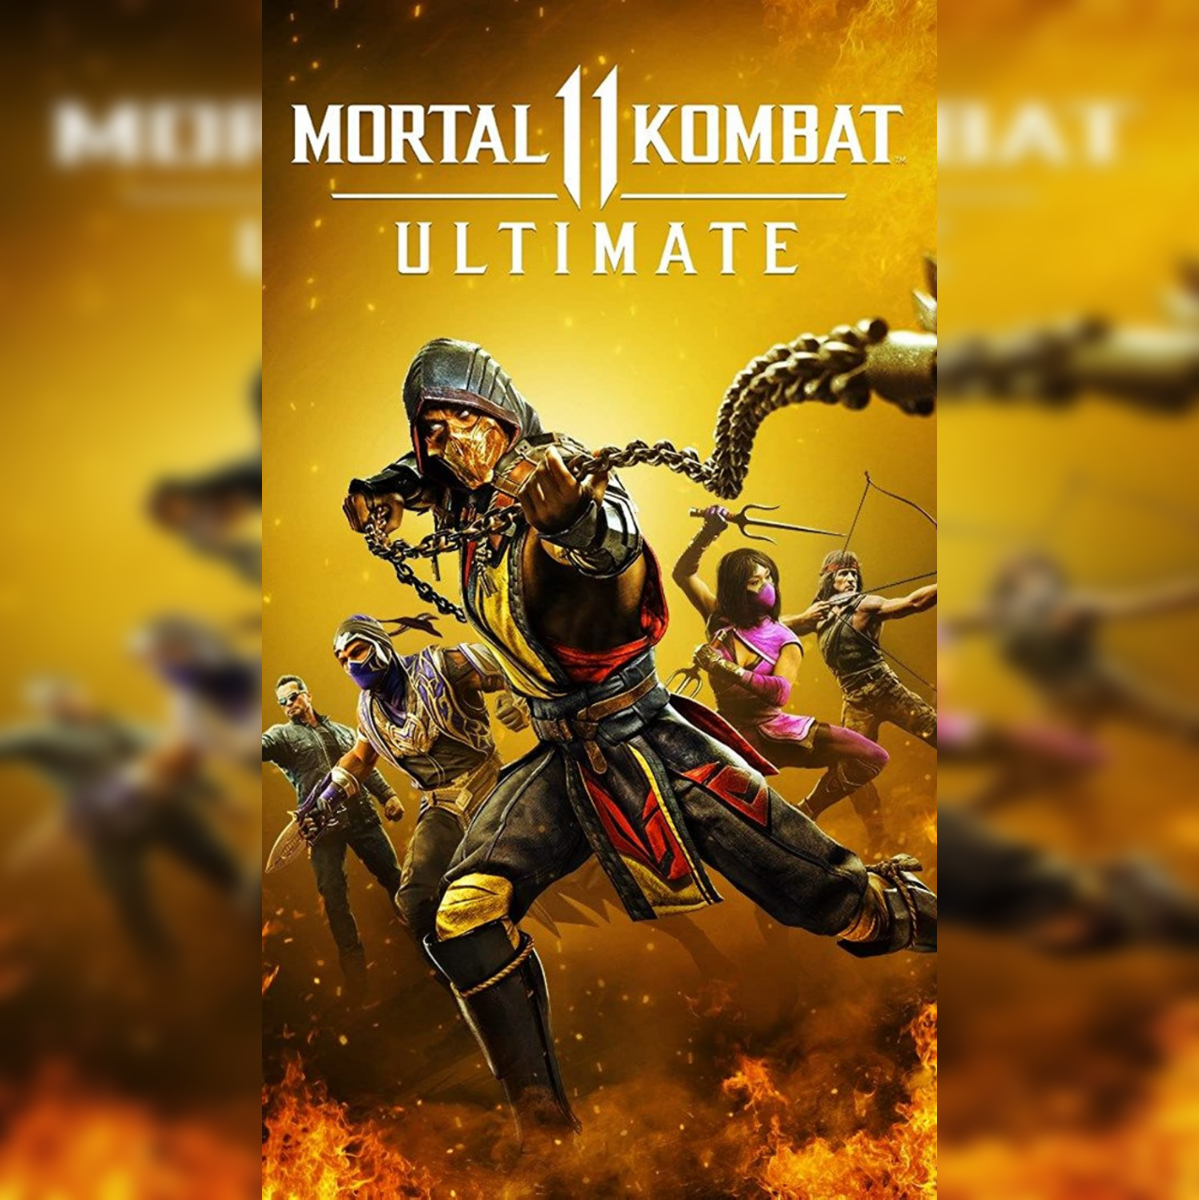 X-Ray Fatality Video Games : Mortal Kombat X trailer